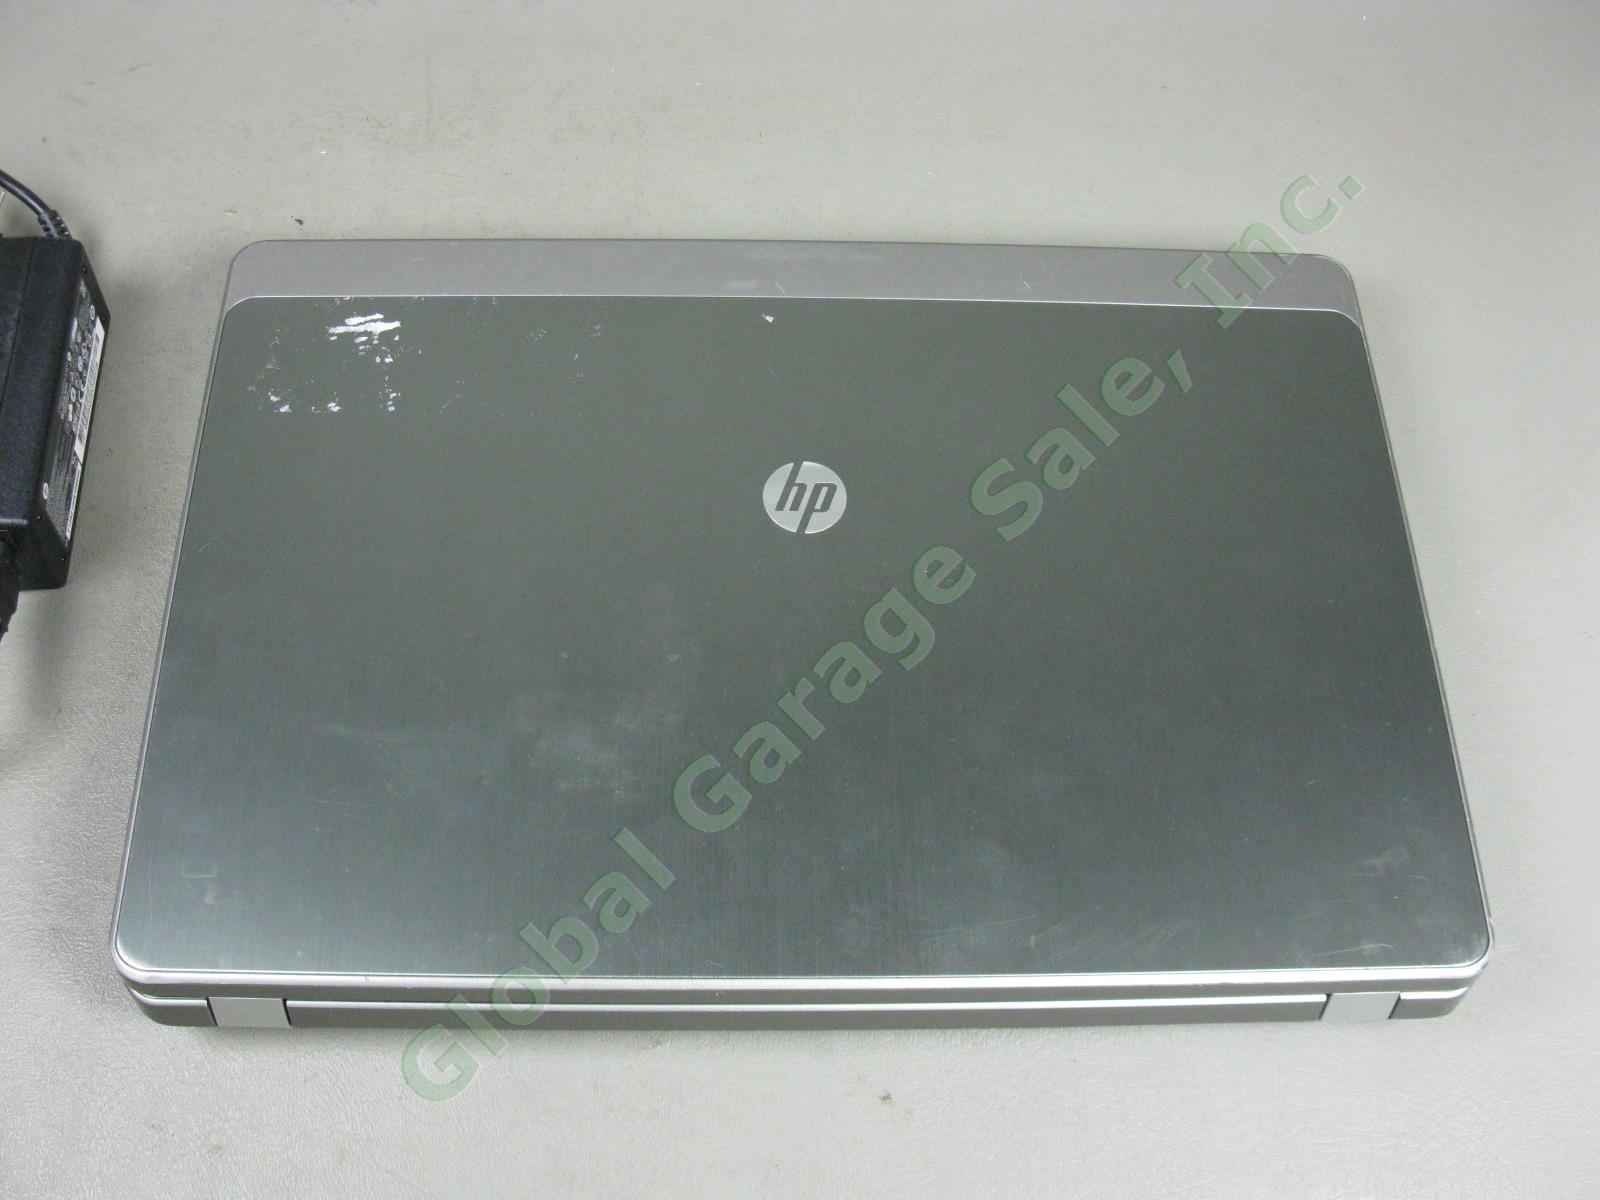 HP ProBook 4530s Laptop Computer Intel i5-2520M 2.50GHz 3GB 300GB Windows 7 Pro 4